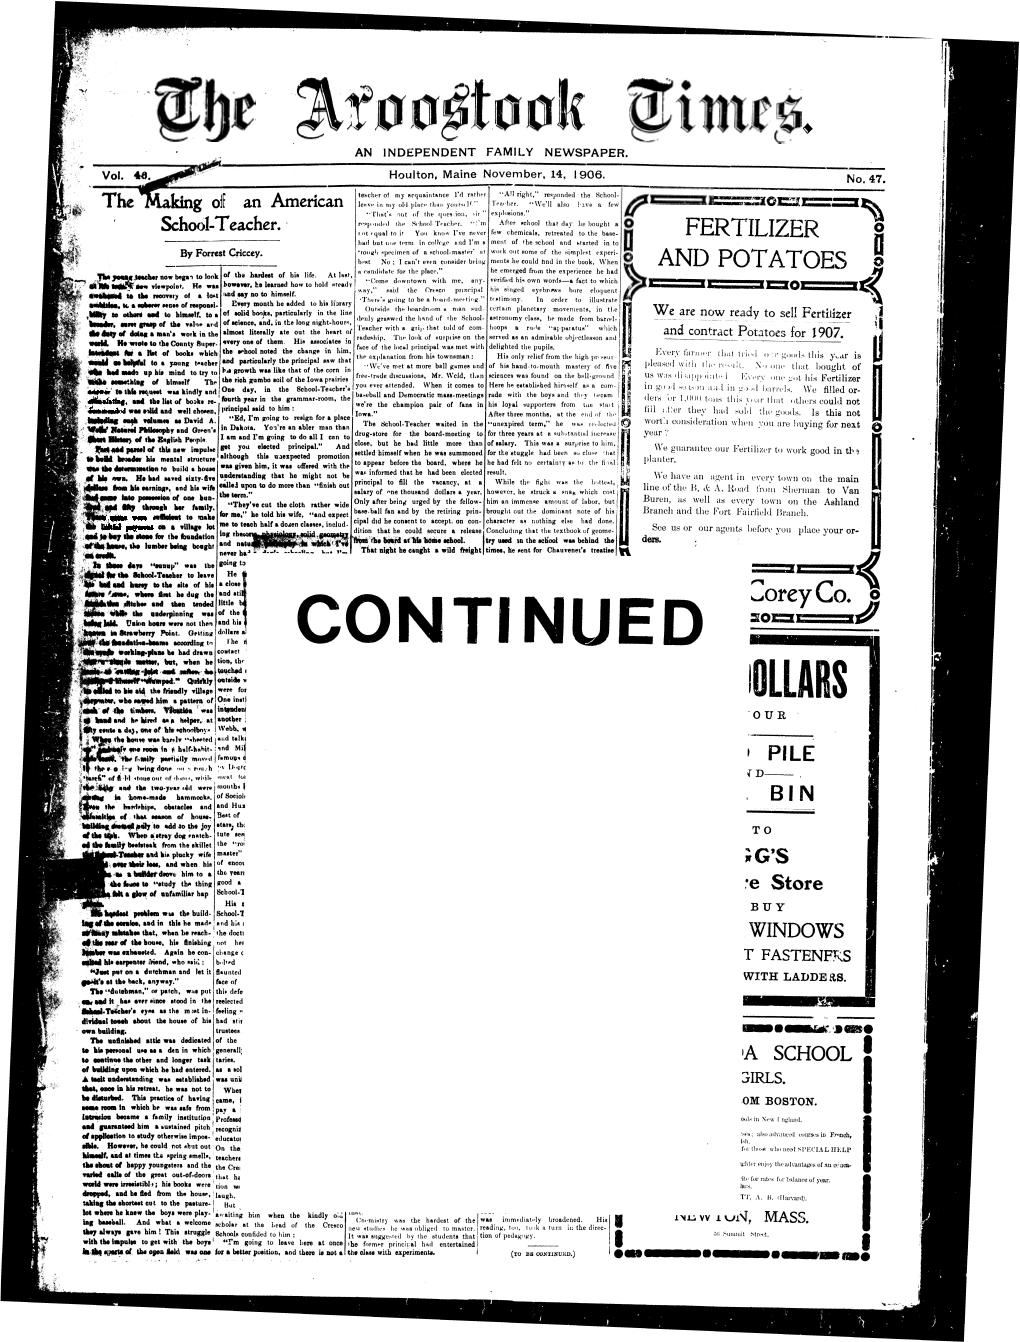 The Aroostook Times, November 14, 1906